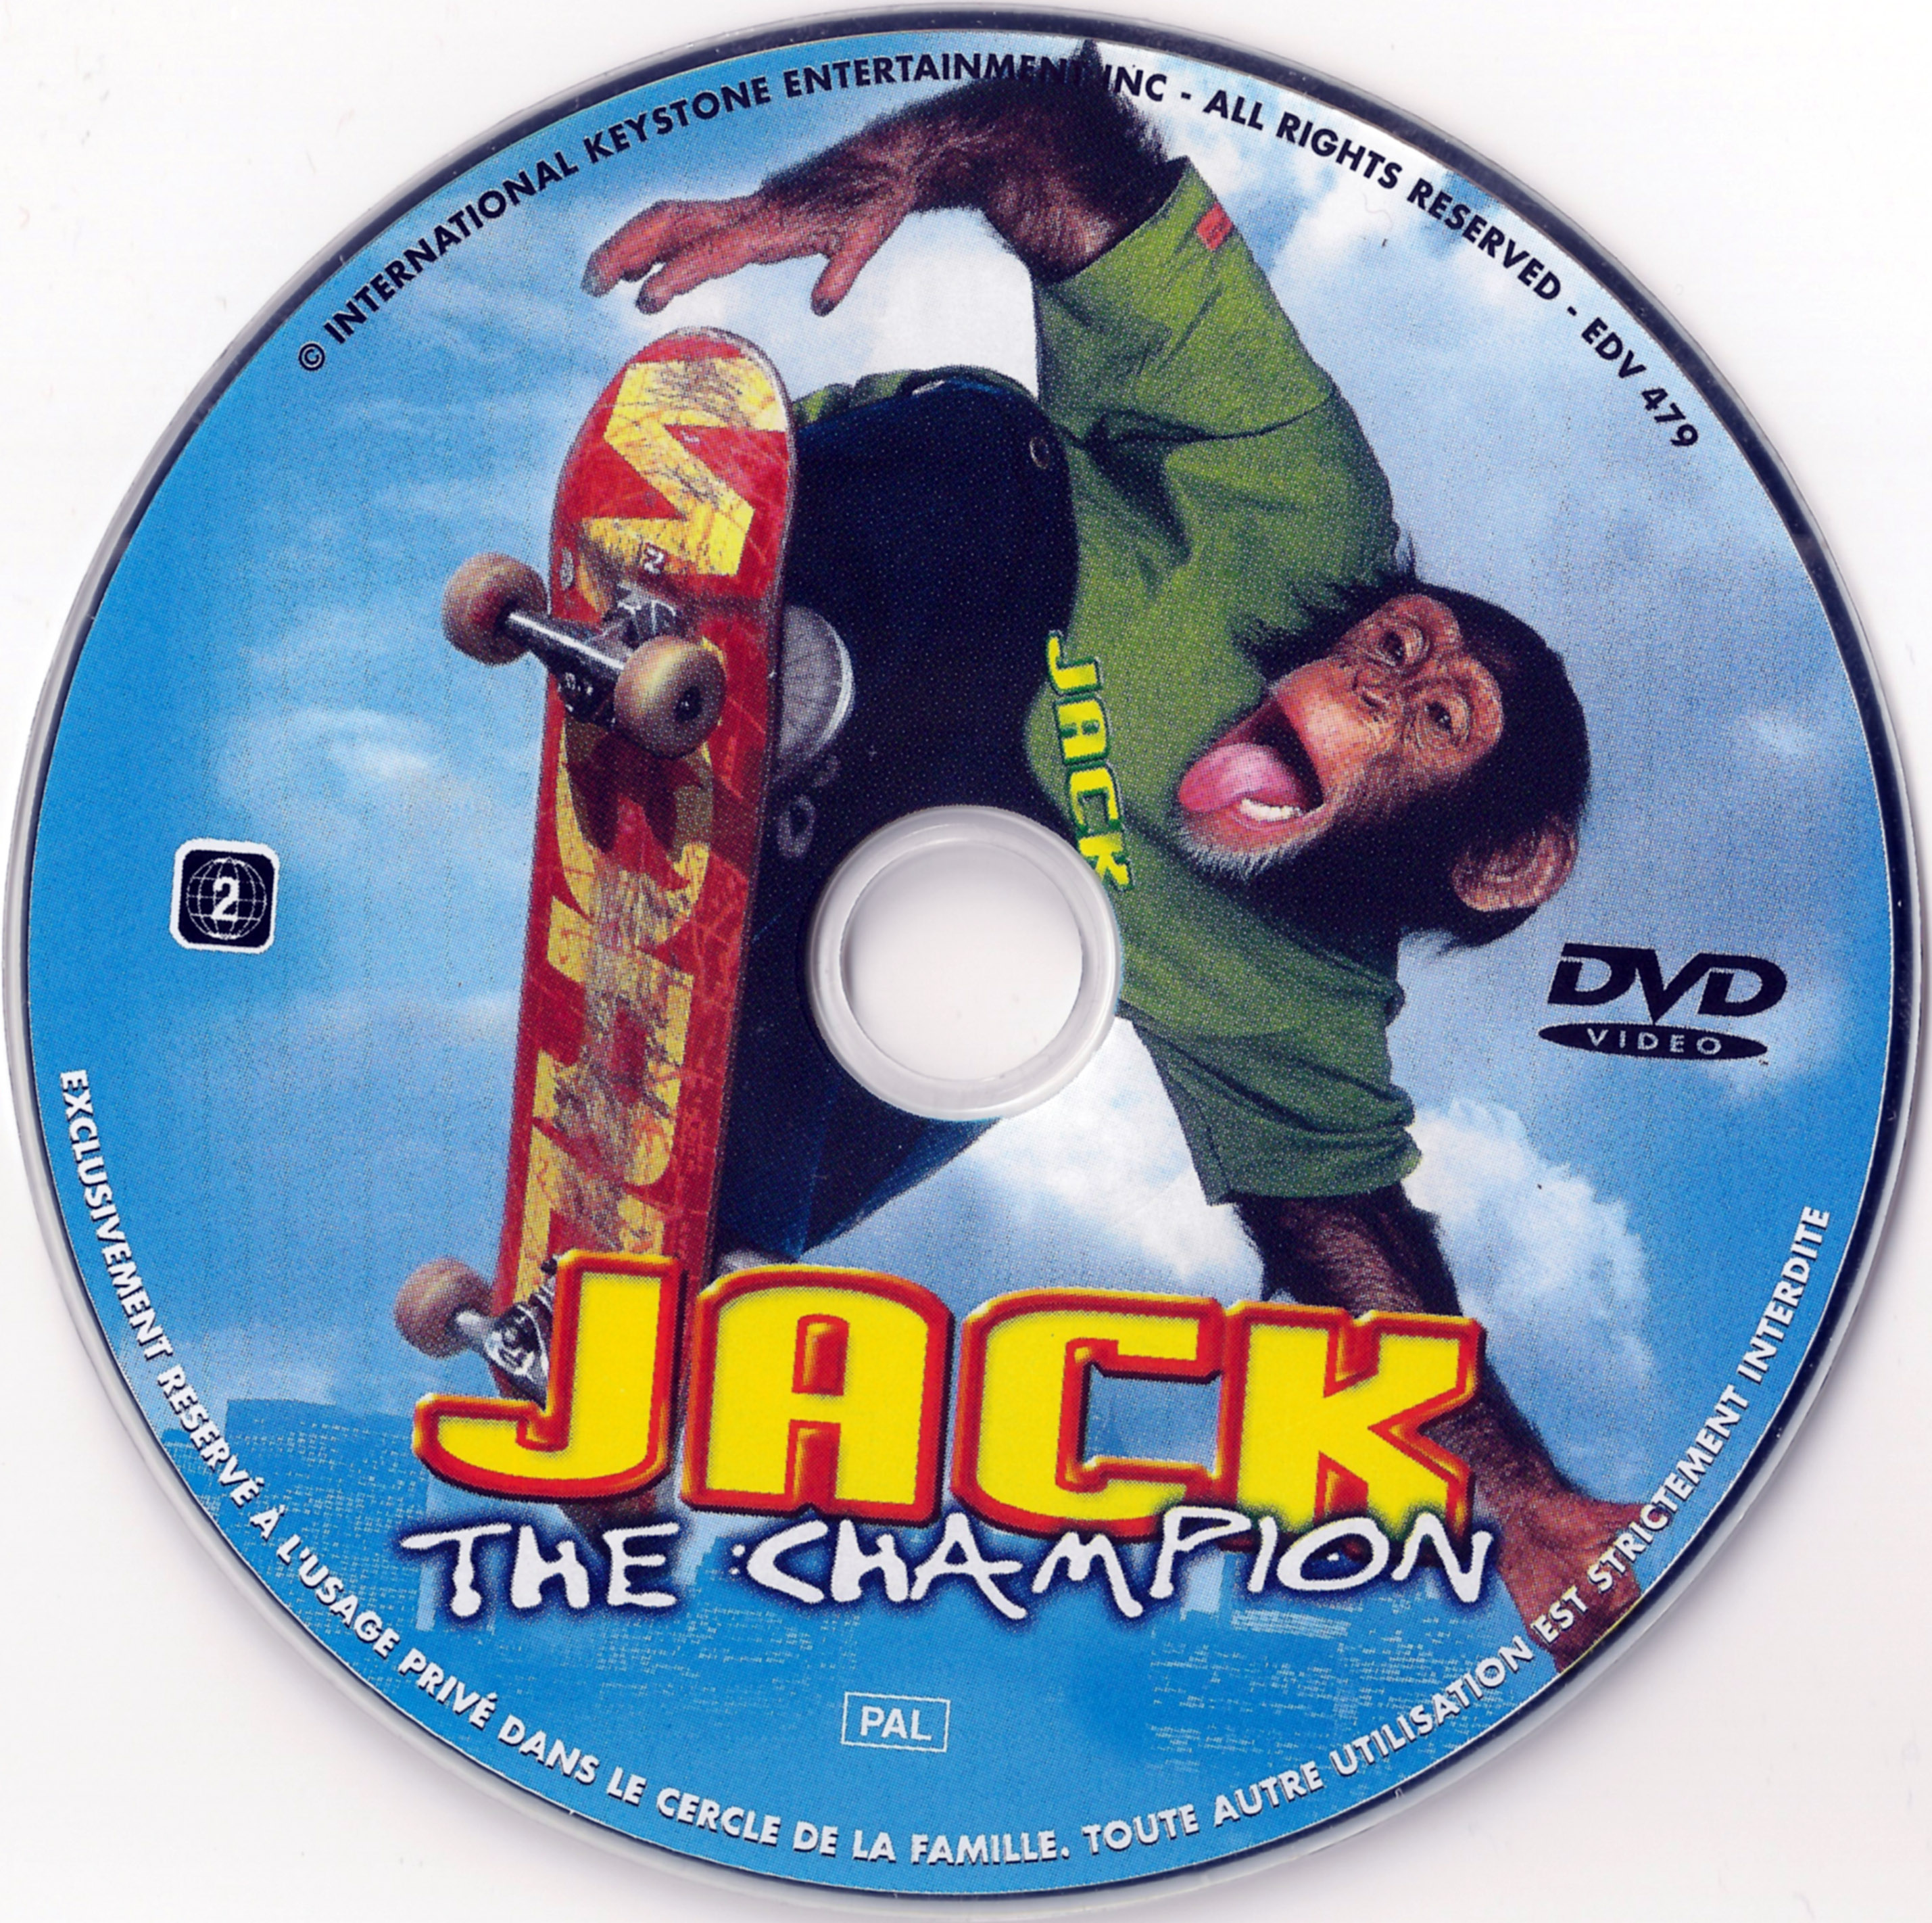 Jack the champion